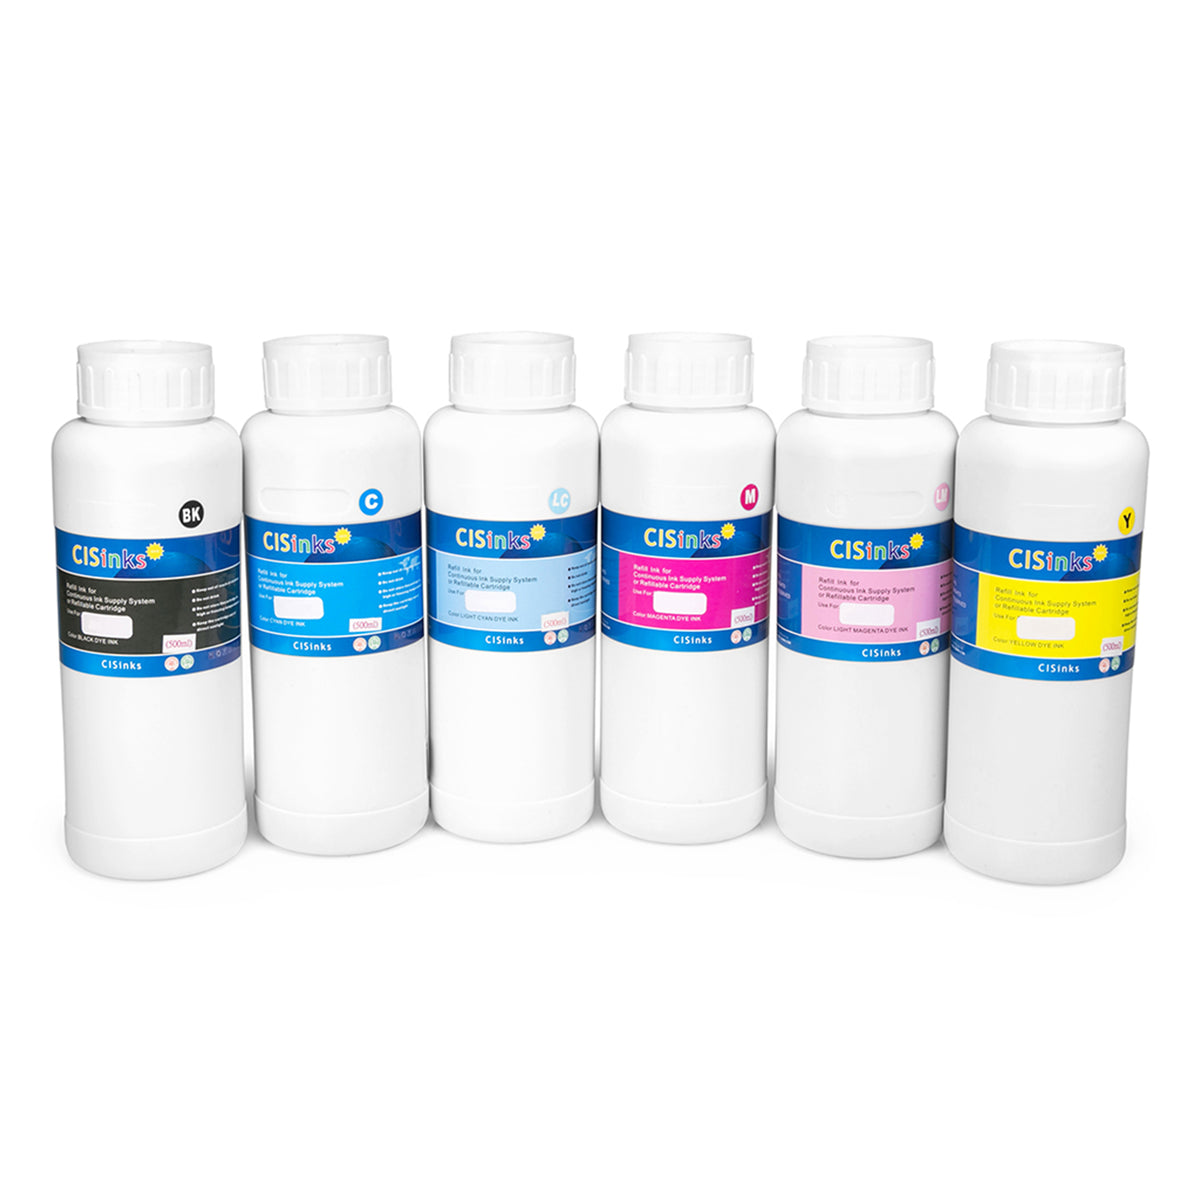 6x500ml Universal Dye Ink Refill Bottle Set - 6 Color  (Black, Yellow, Cyan, Magenta, Light Cyan, Light Magenta)  for Epson, Canon, HP, Brotherand all Major Brand Inkjet Printers